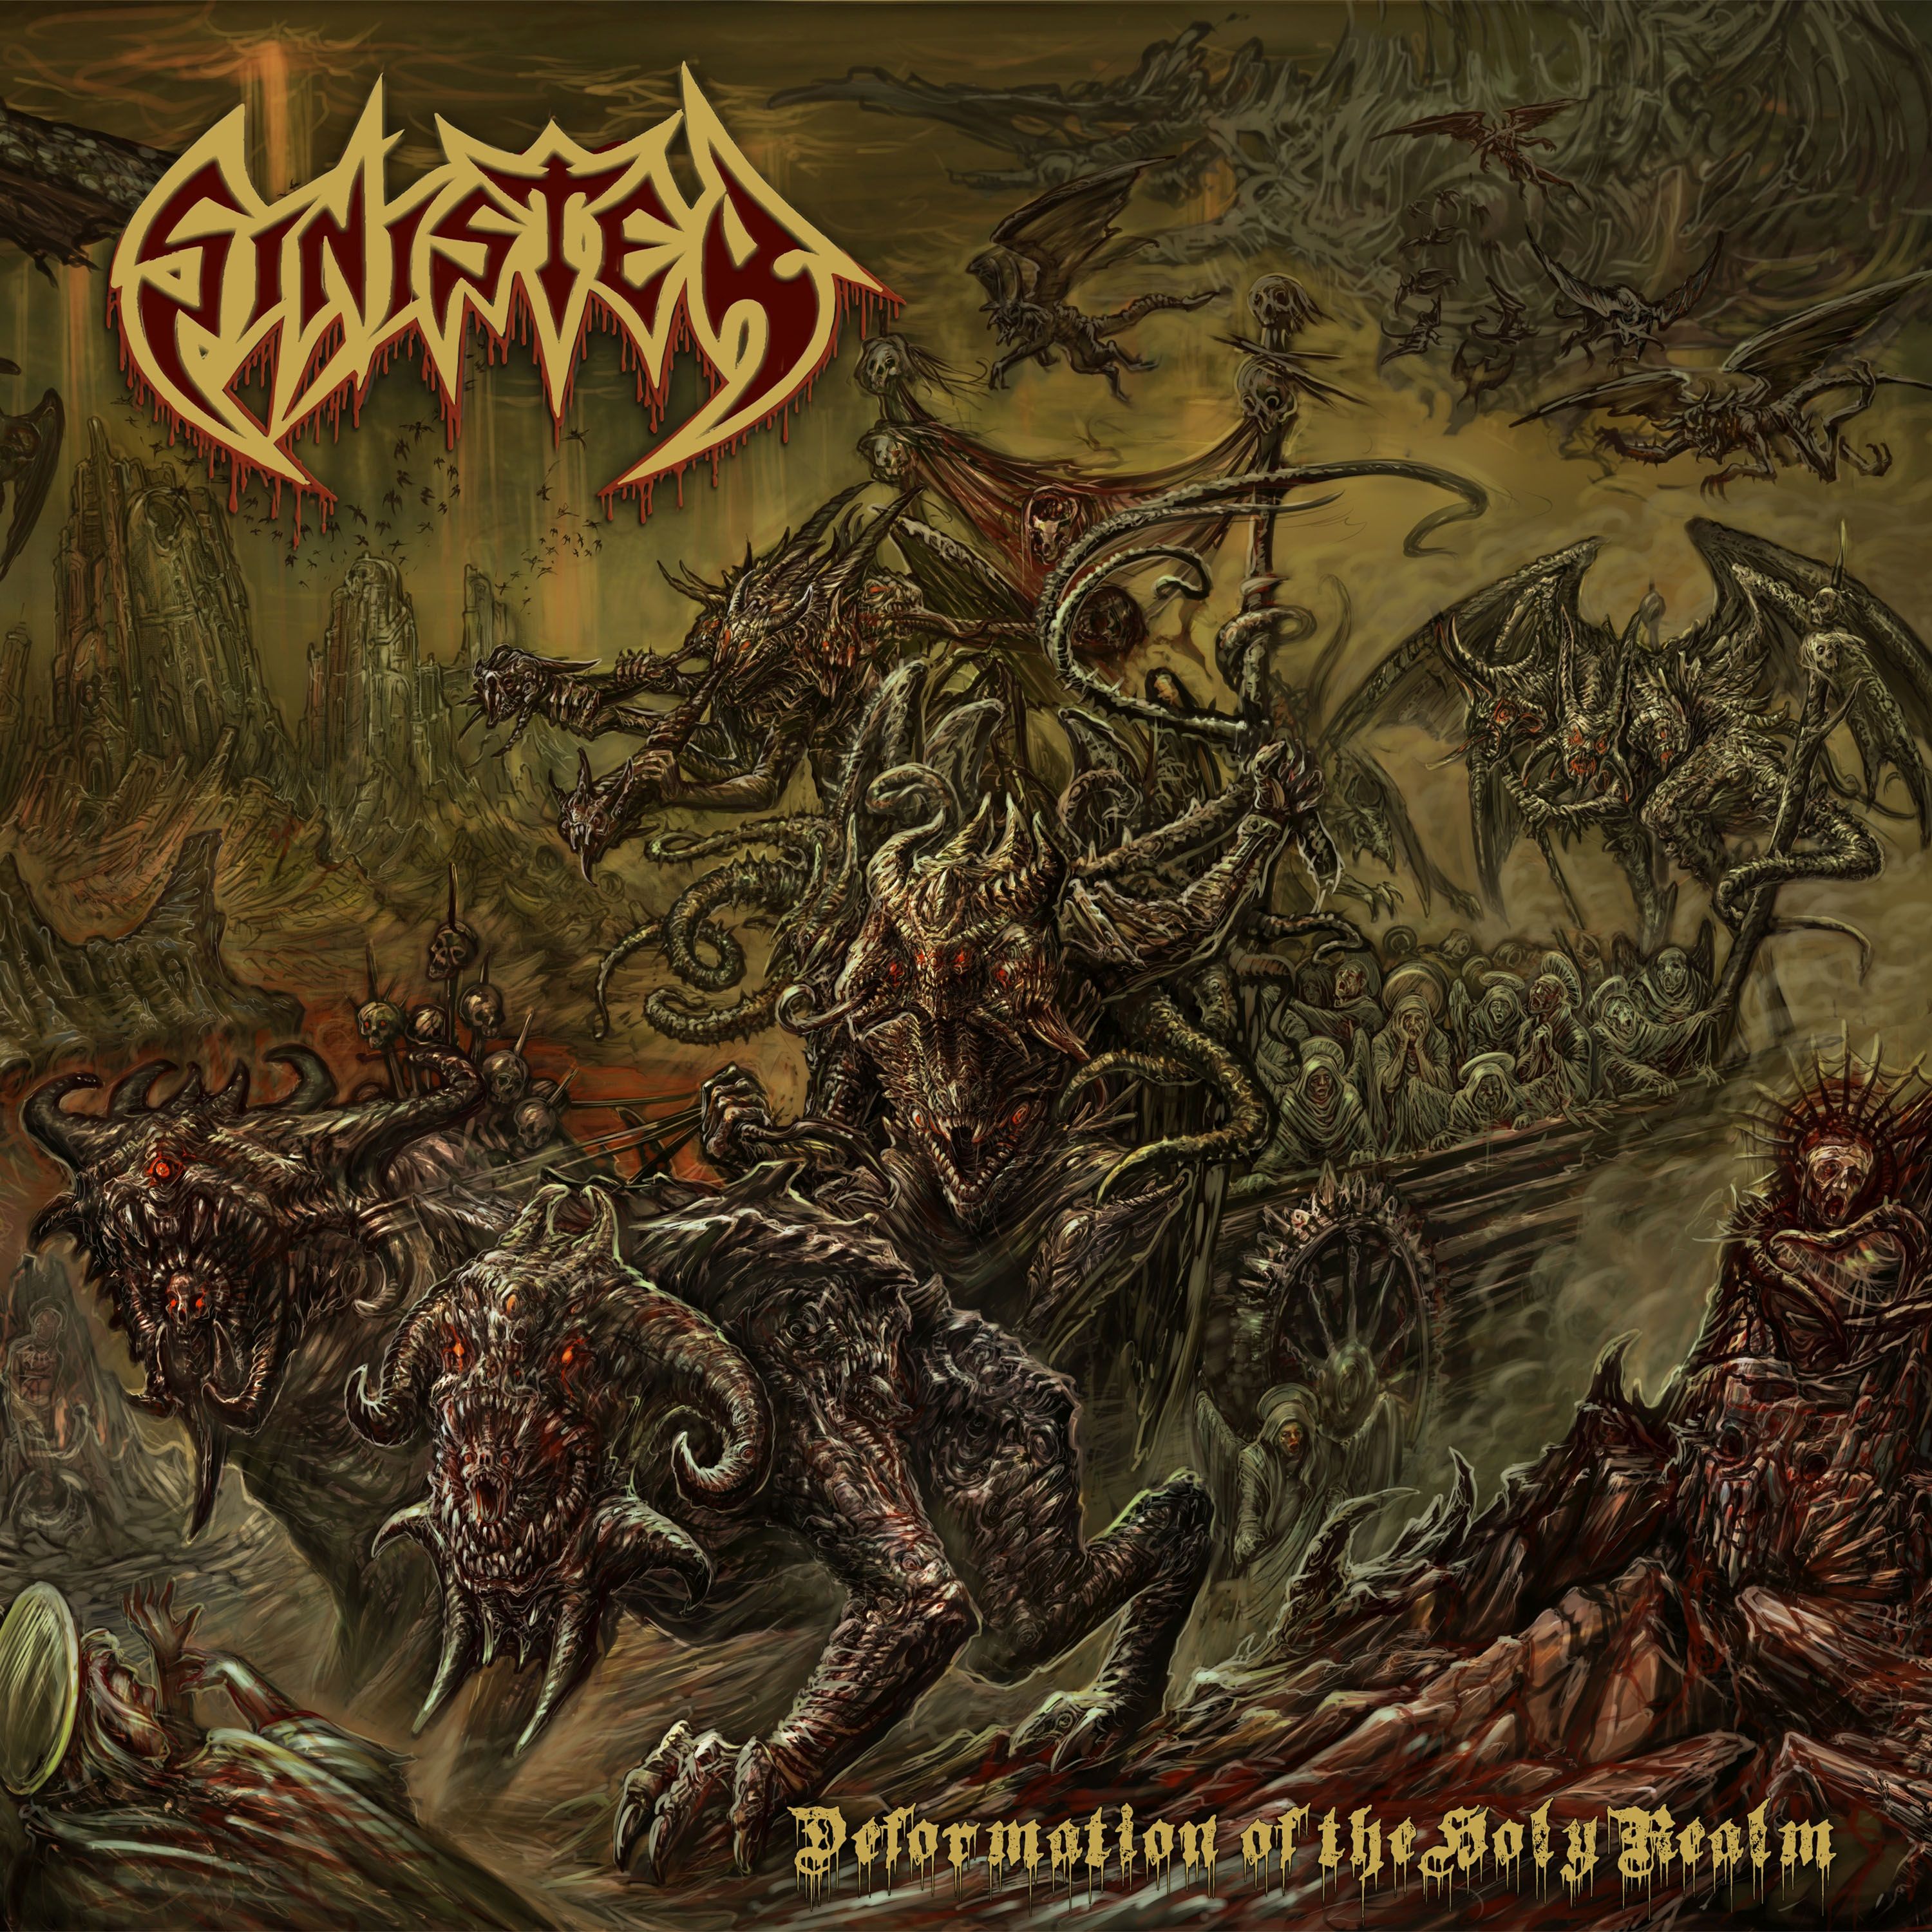 Обложки метал групп. Обложка Sinister - 2020 - deformation of the Holy Realm. Группа Sinister ДЭТ-метал-группы.